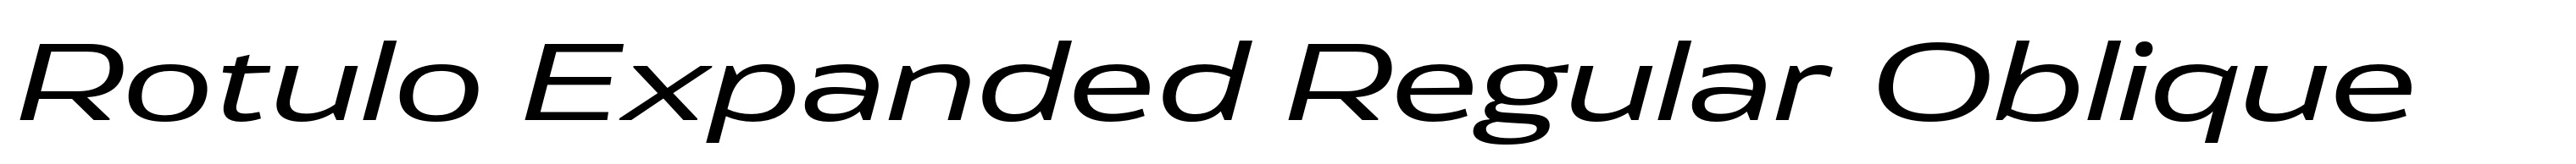 Rotulo Expanded Regular Oblique